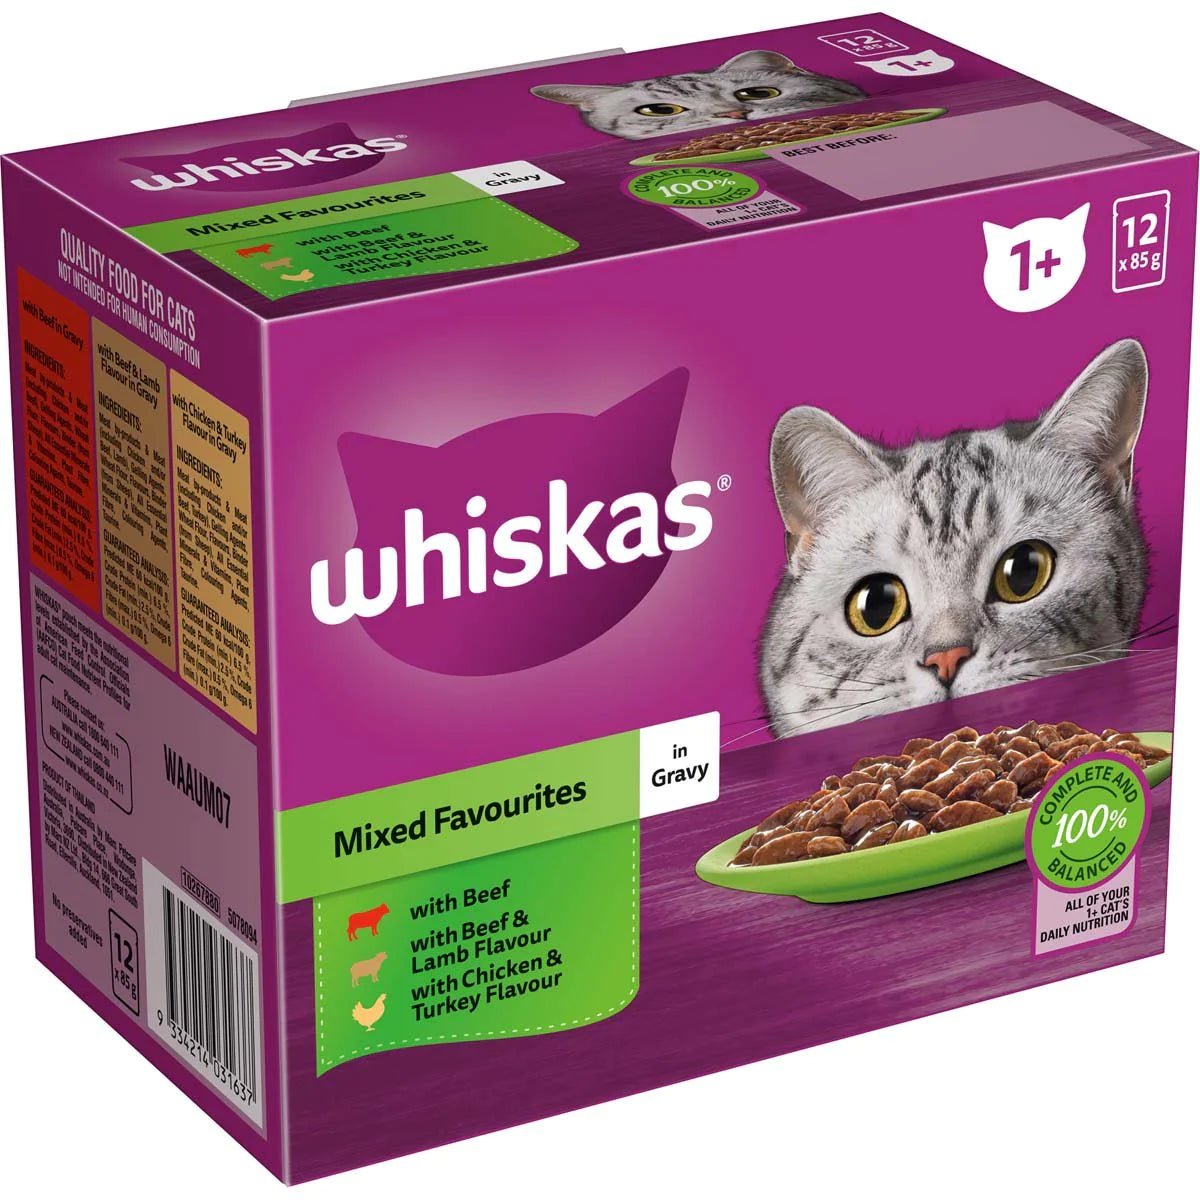 Whiskas Wet Cat Food Mixed Favorites in Gravy 12x85g - Woonona Petfood & Produce